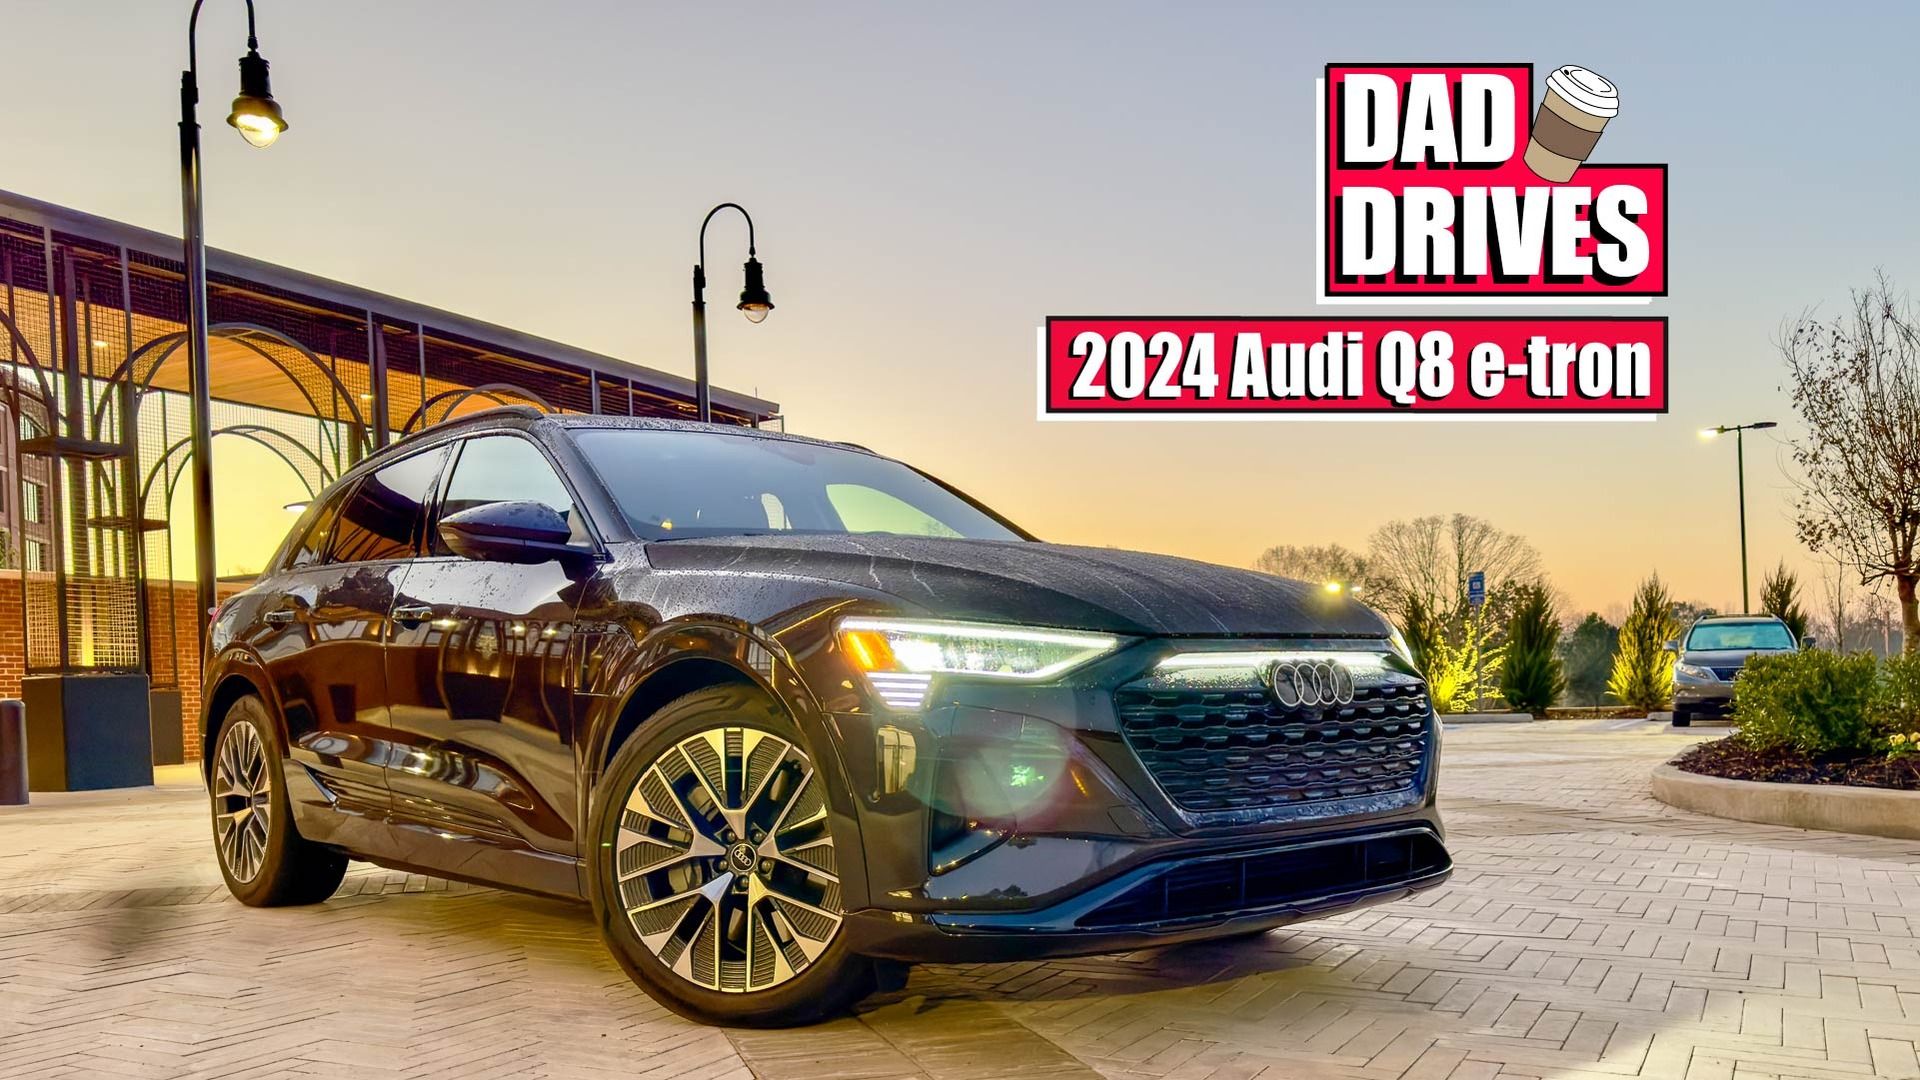 2024 Audi Q8 e-tron Dad Drives